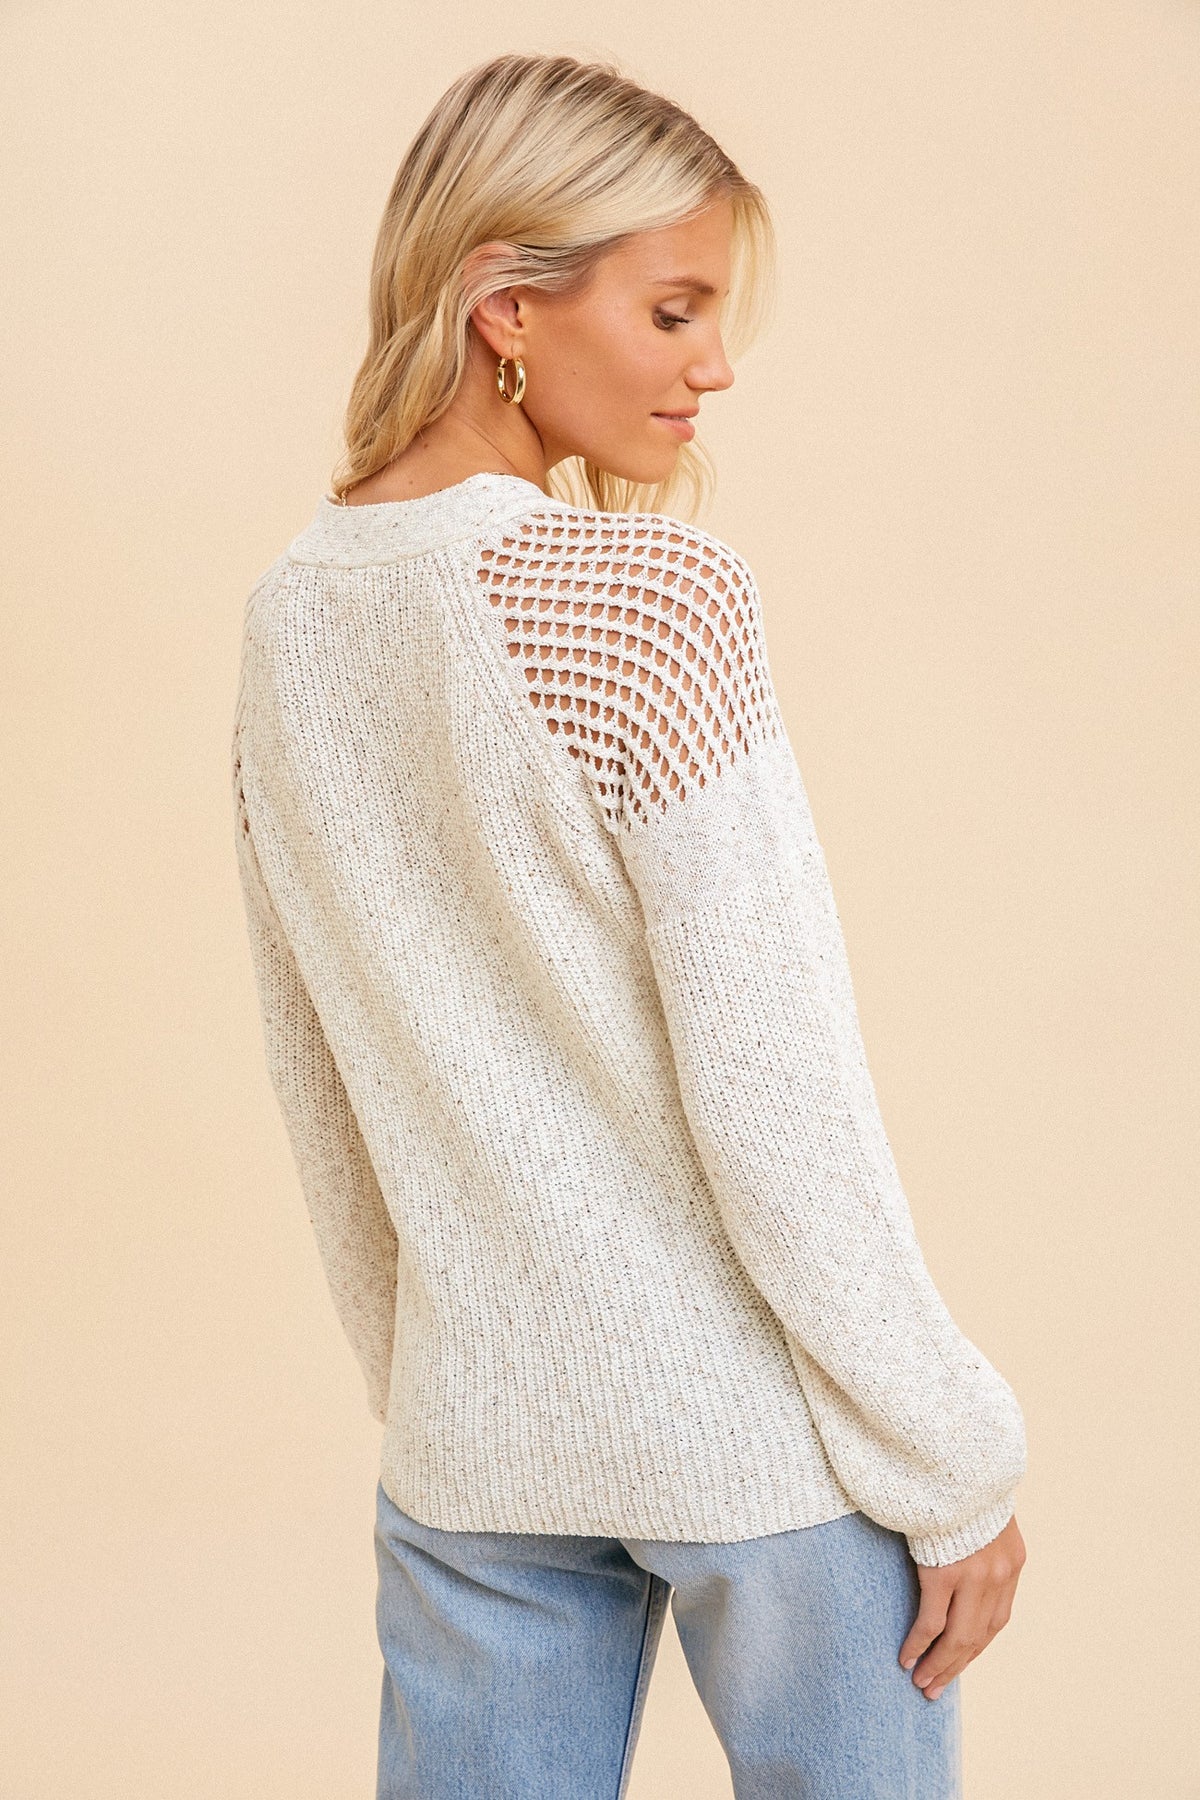 Textured Sweater *Final Sale*